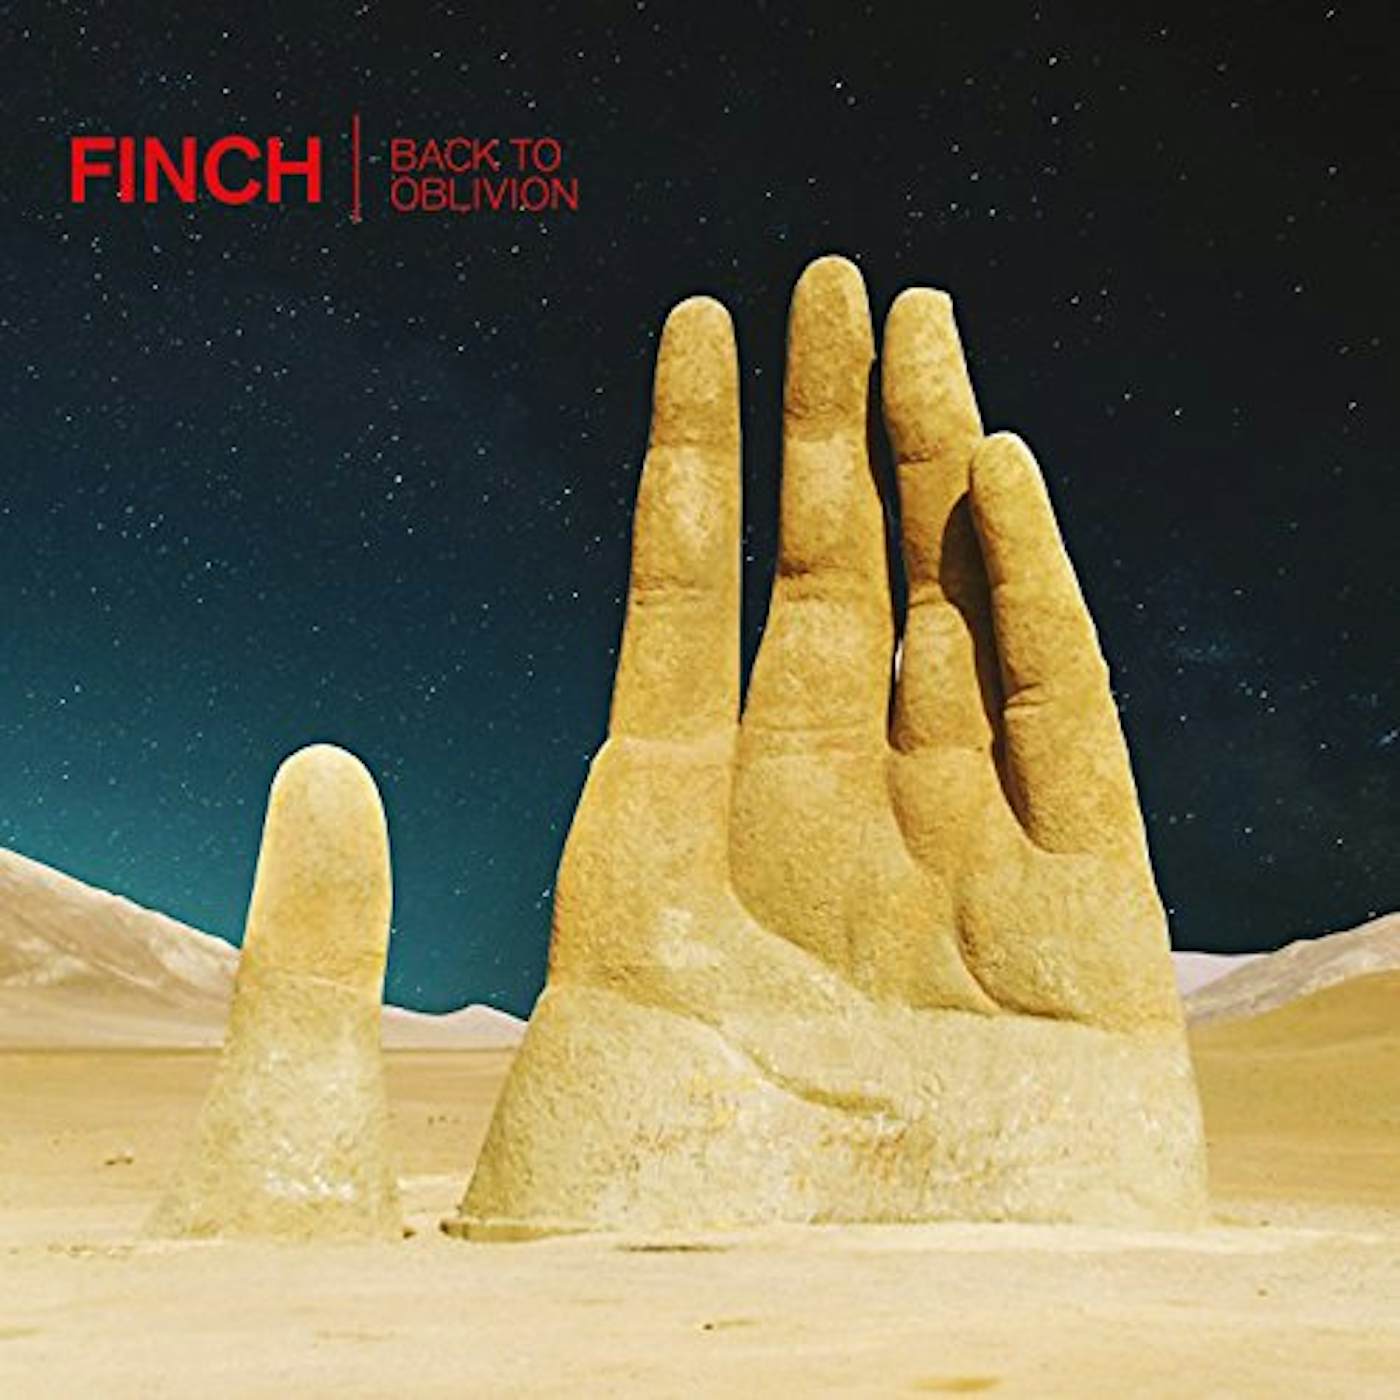 Finch Back To Oblivion Vinyl Record